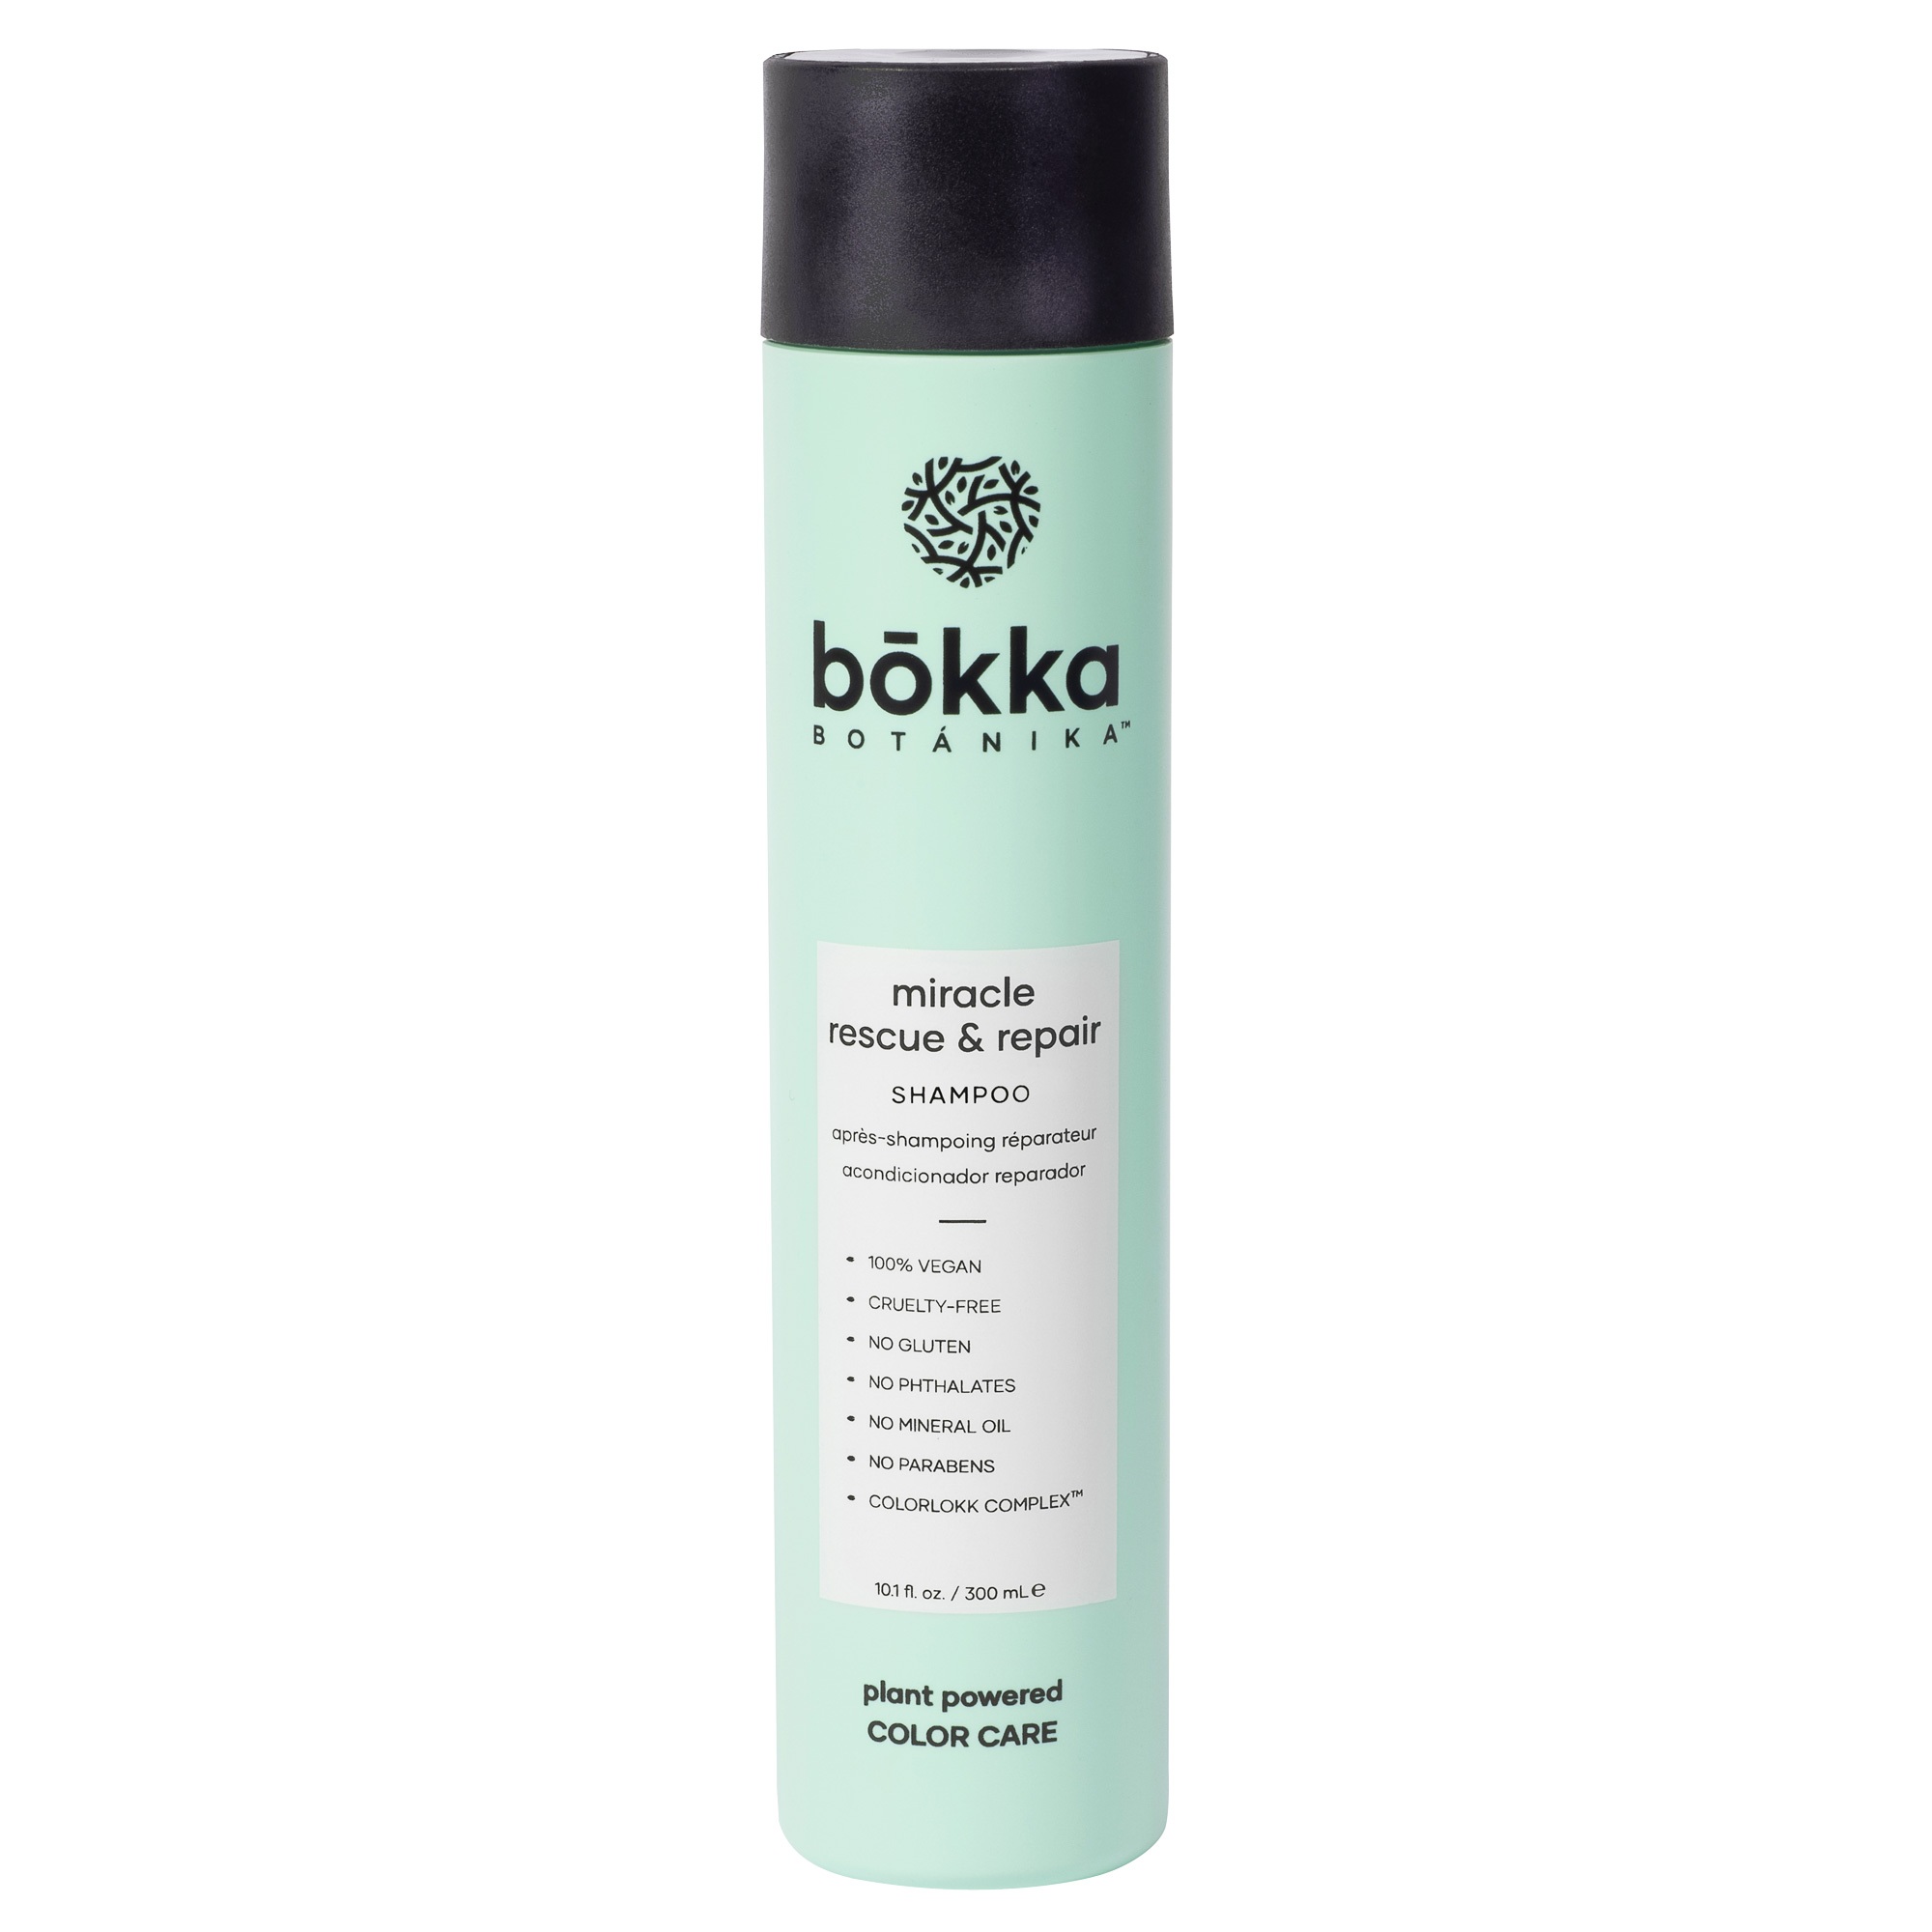 bokka BOTANIKA Miracle Rescue & Repair Shampoo